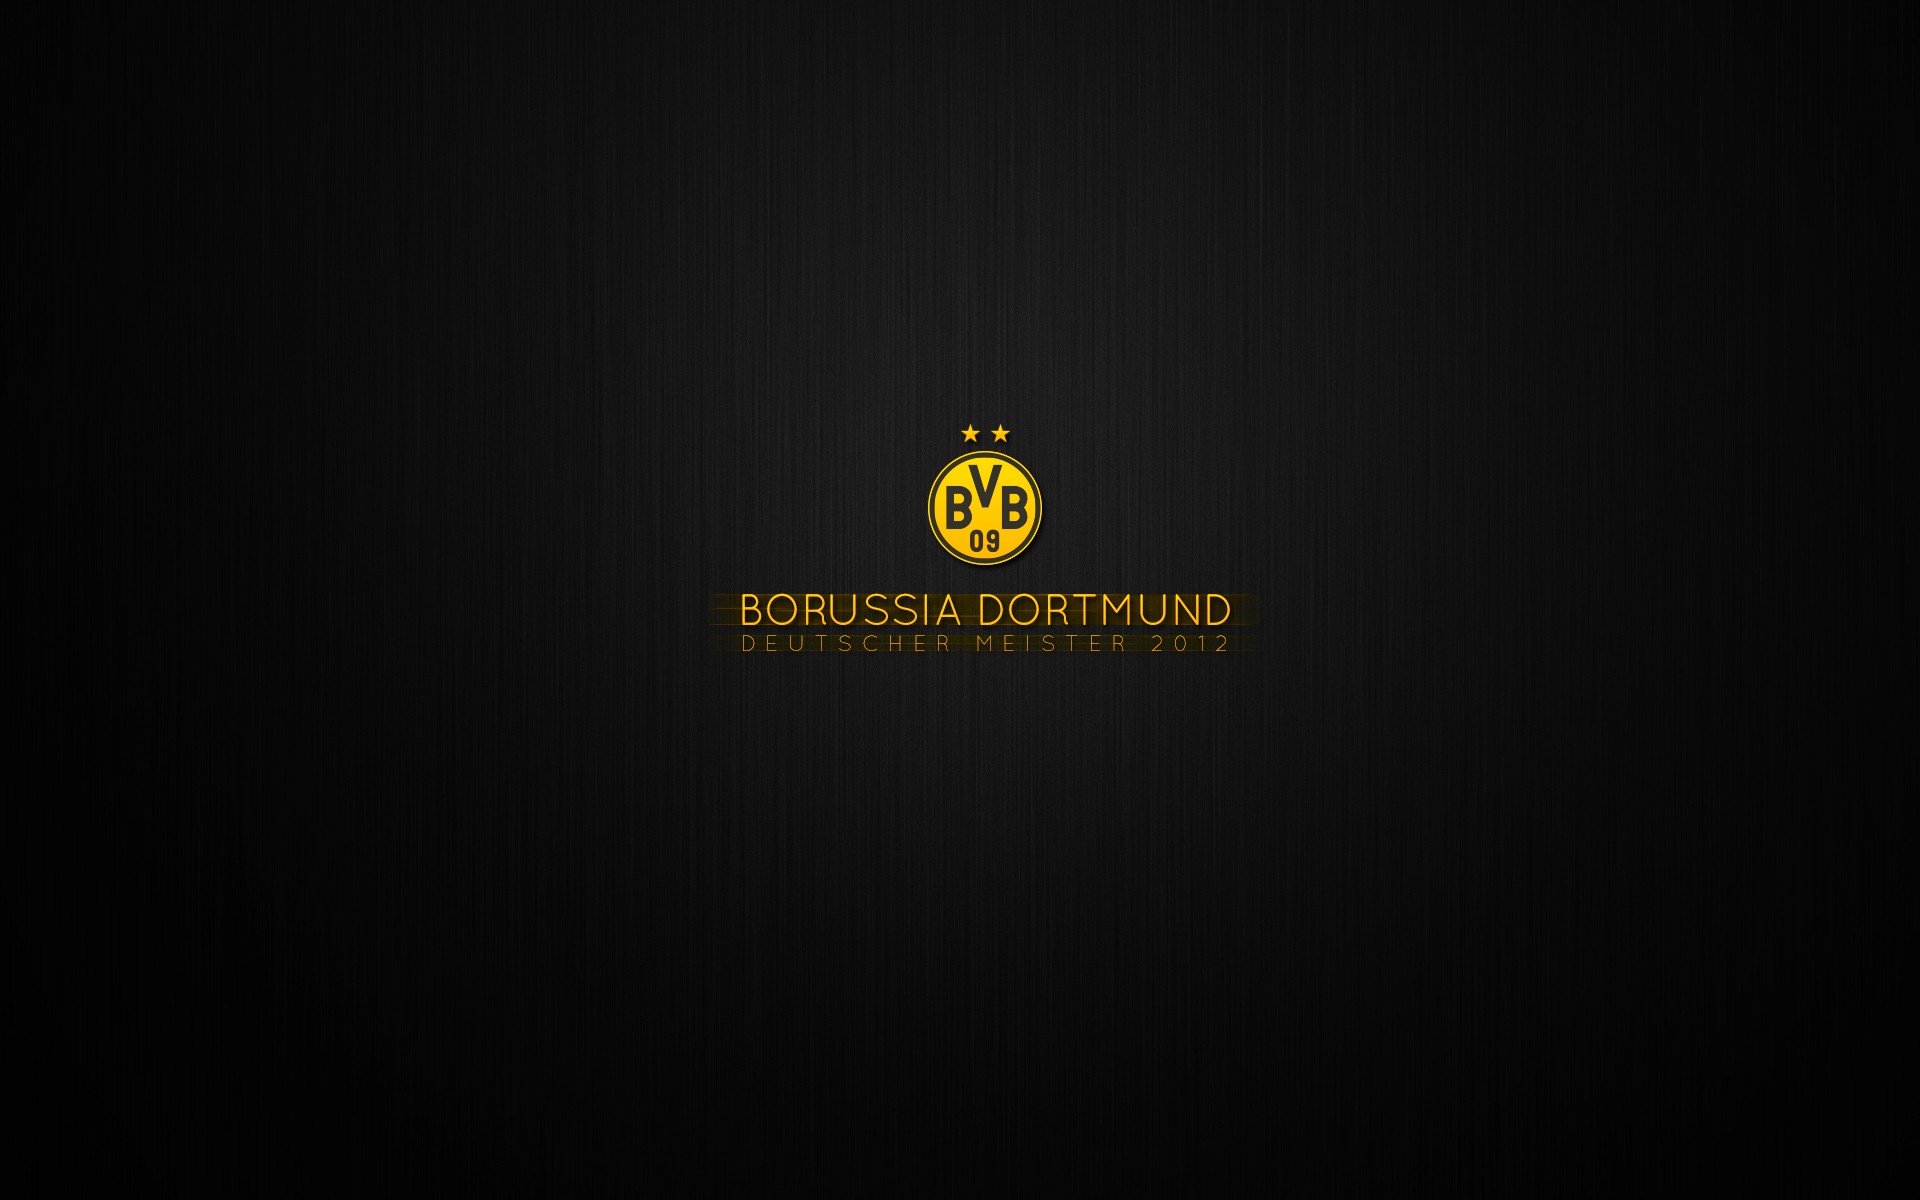 General 1920x1200 soccer Borussia Dortmund minimalism logo Germany sport black background simple background numbers soccer clubs